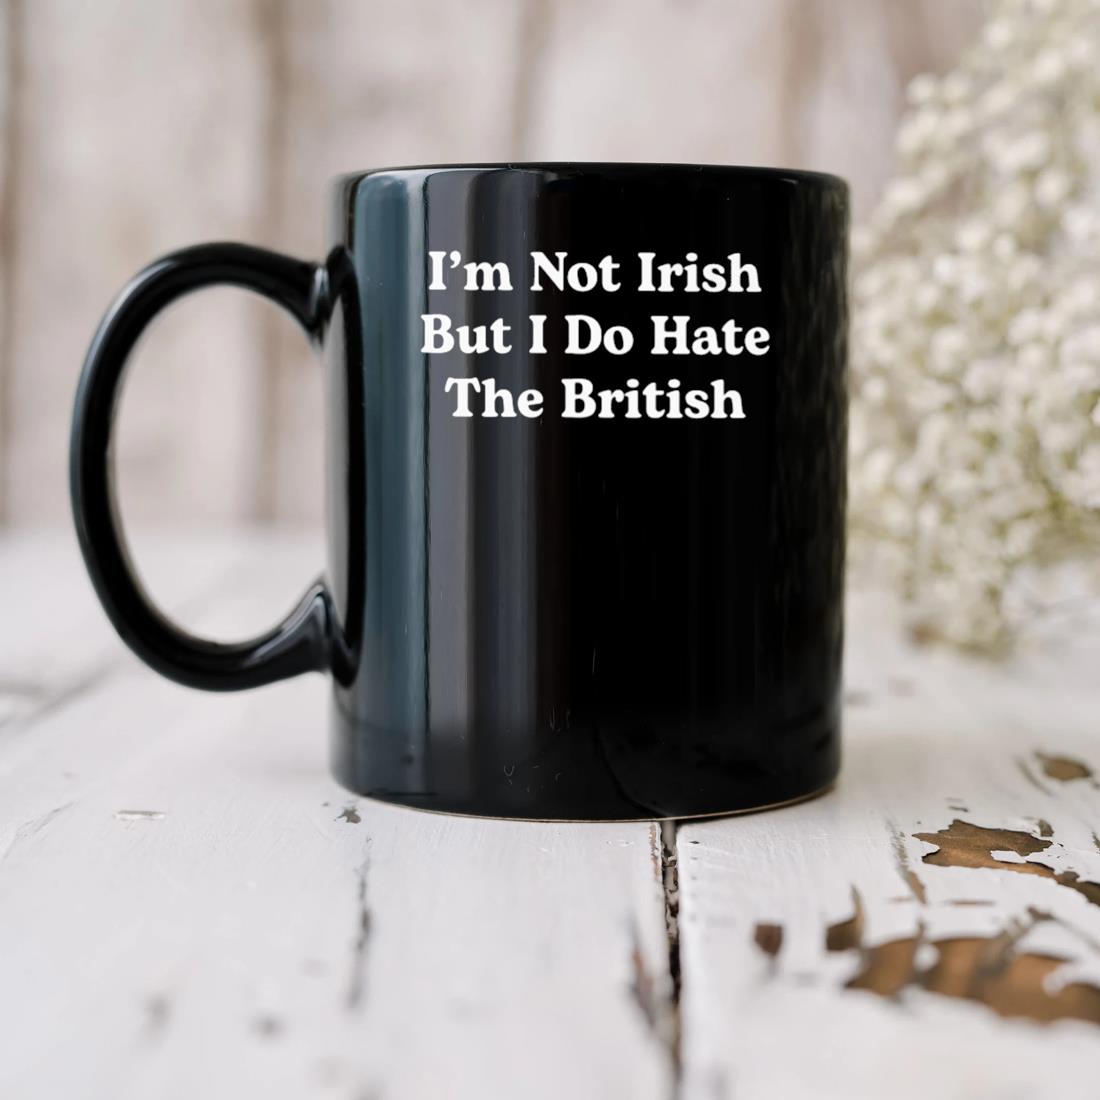 I'm Not Irish But I Do Hate The British Mug